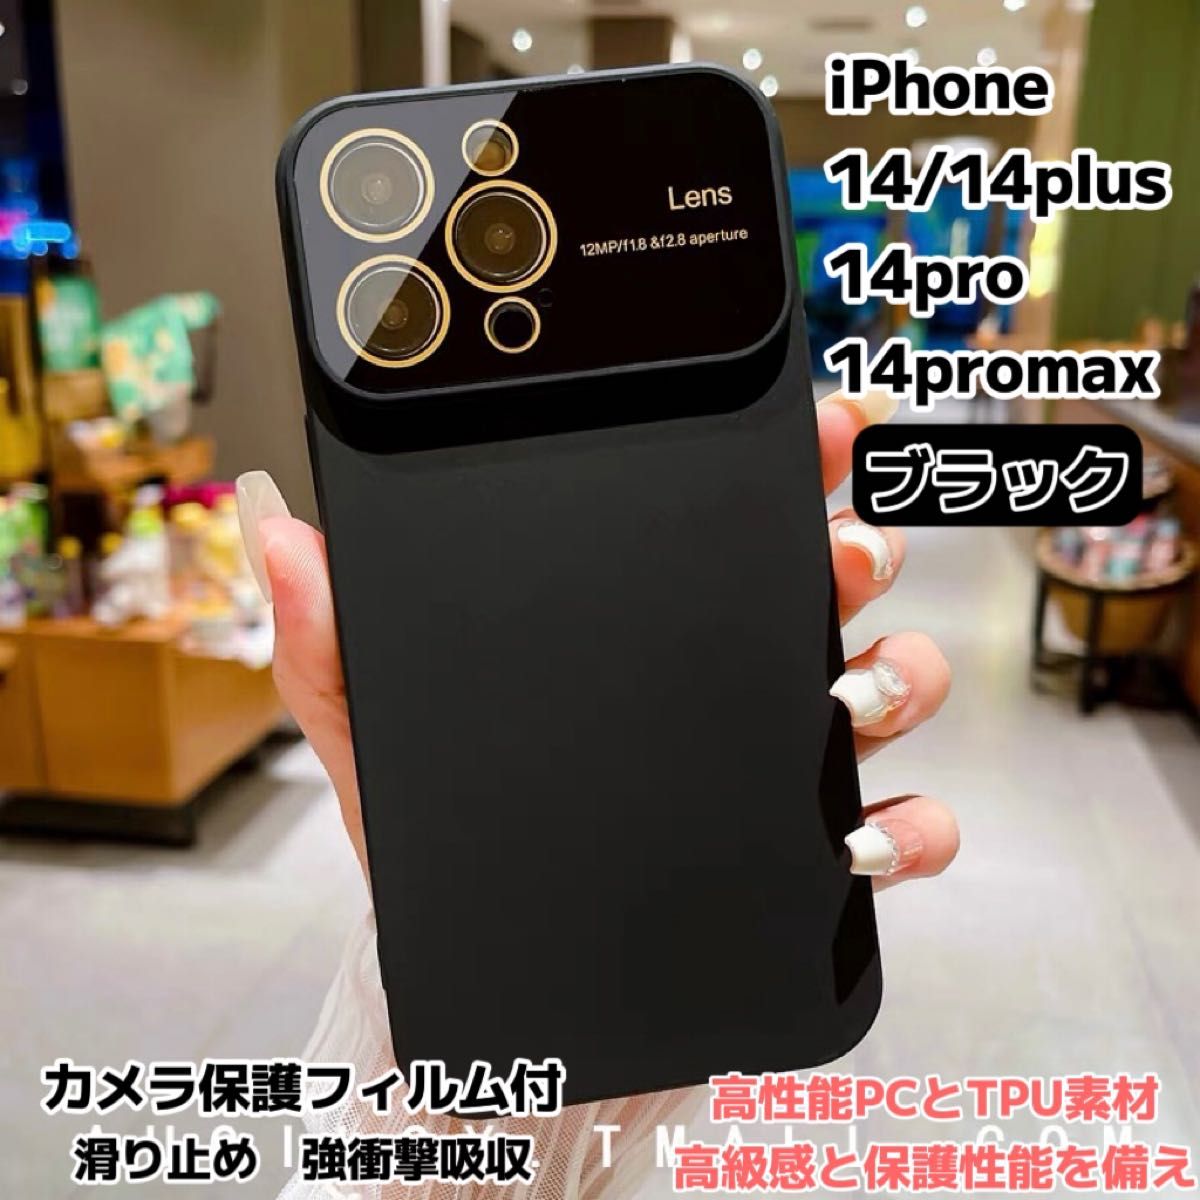 iPhone14 iPhone14plus iPhone14promax ケース マグセーフリング付 耐衝撃 カメラ保護フィルム付